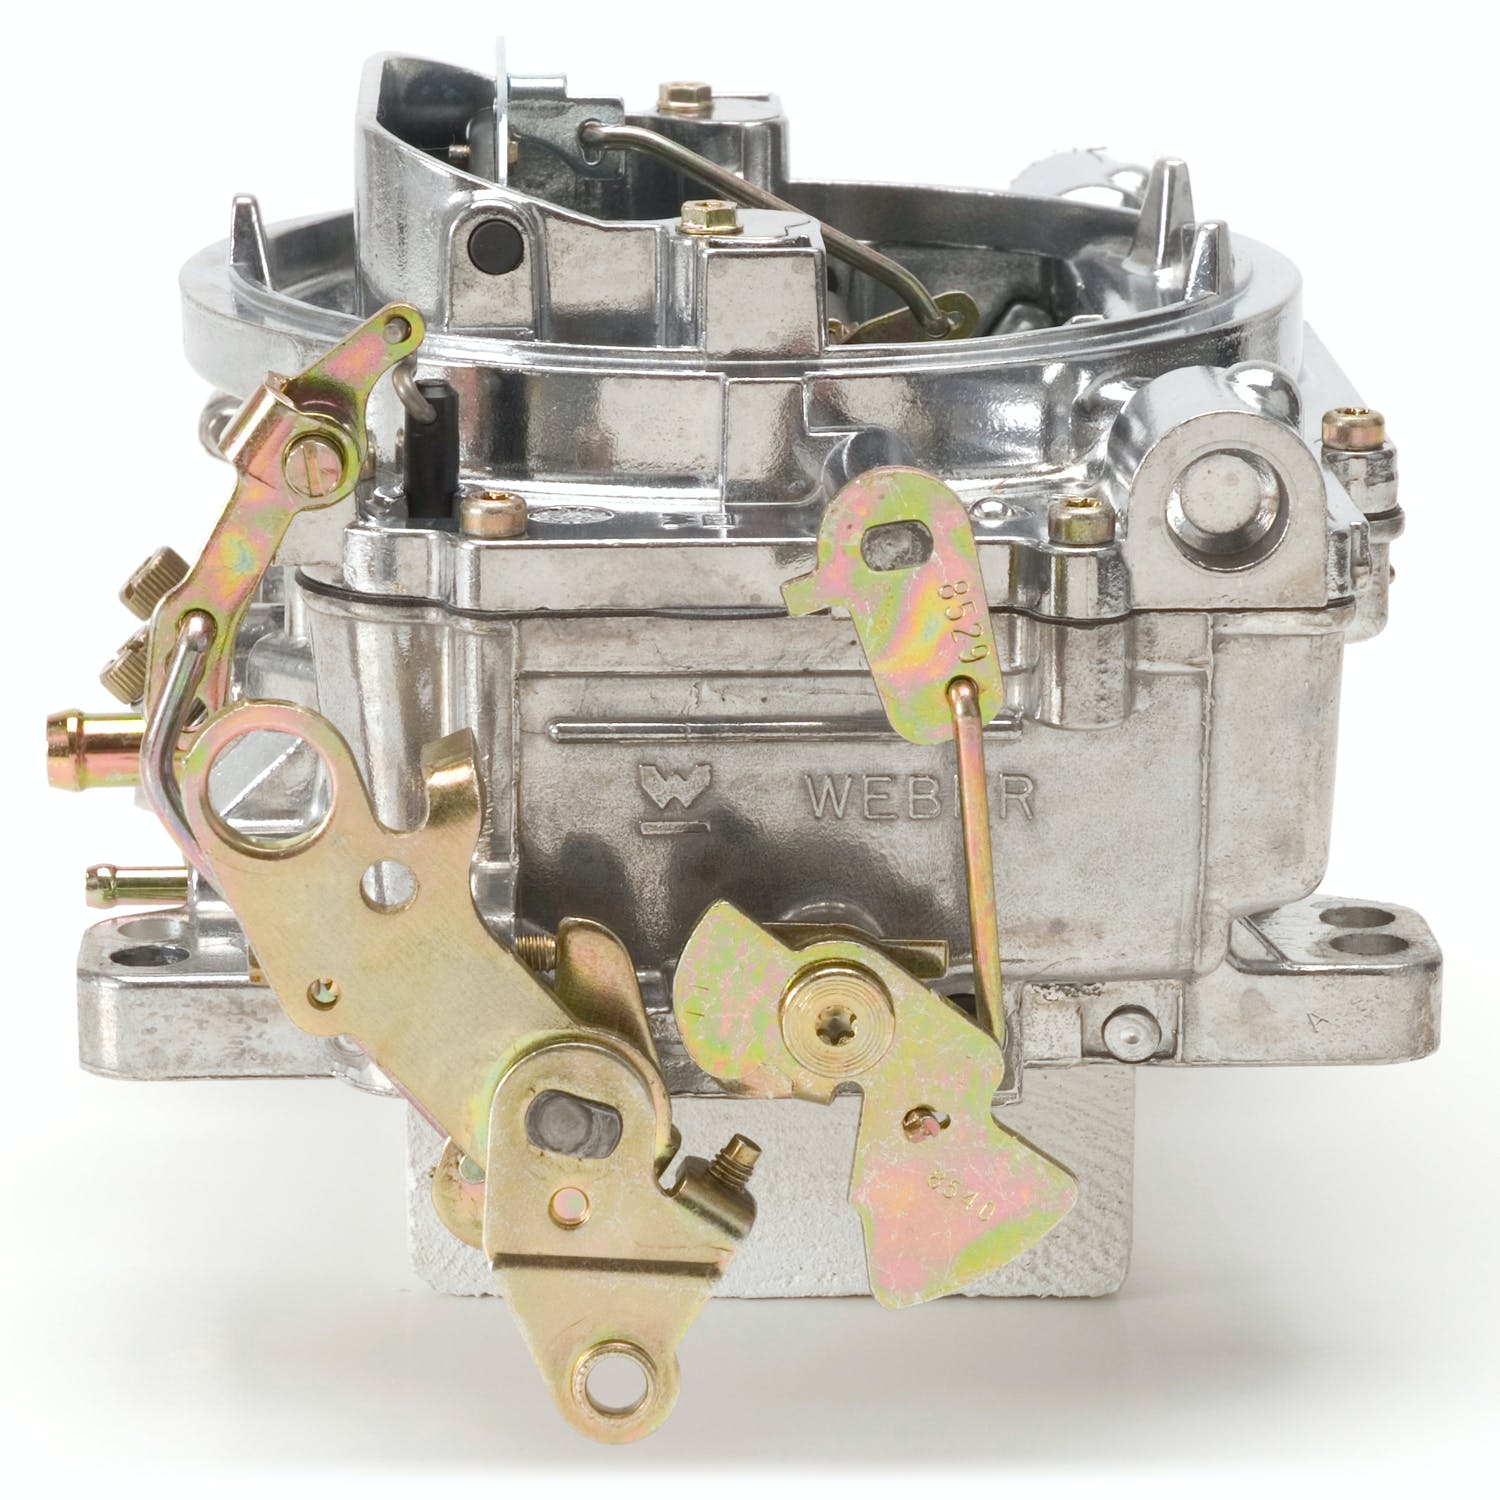 Edelbrock 1407 Performer Series 750 CFM Carburetor with Manual Choke in Satin (non-EGR)